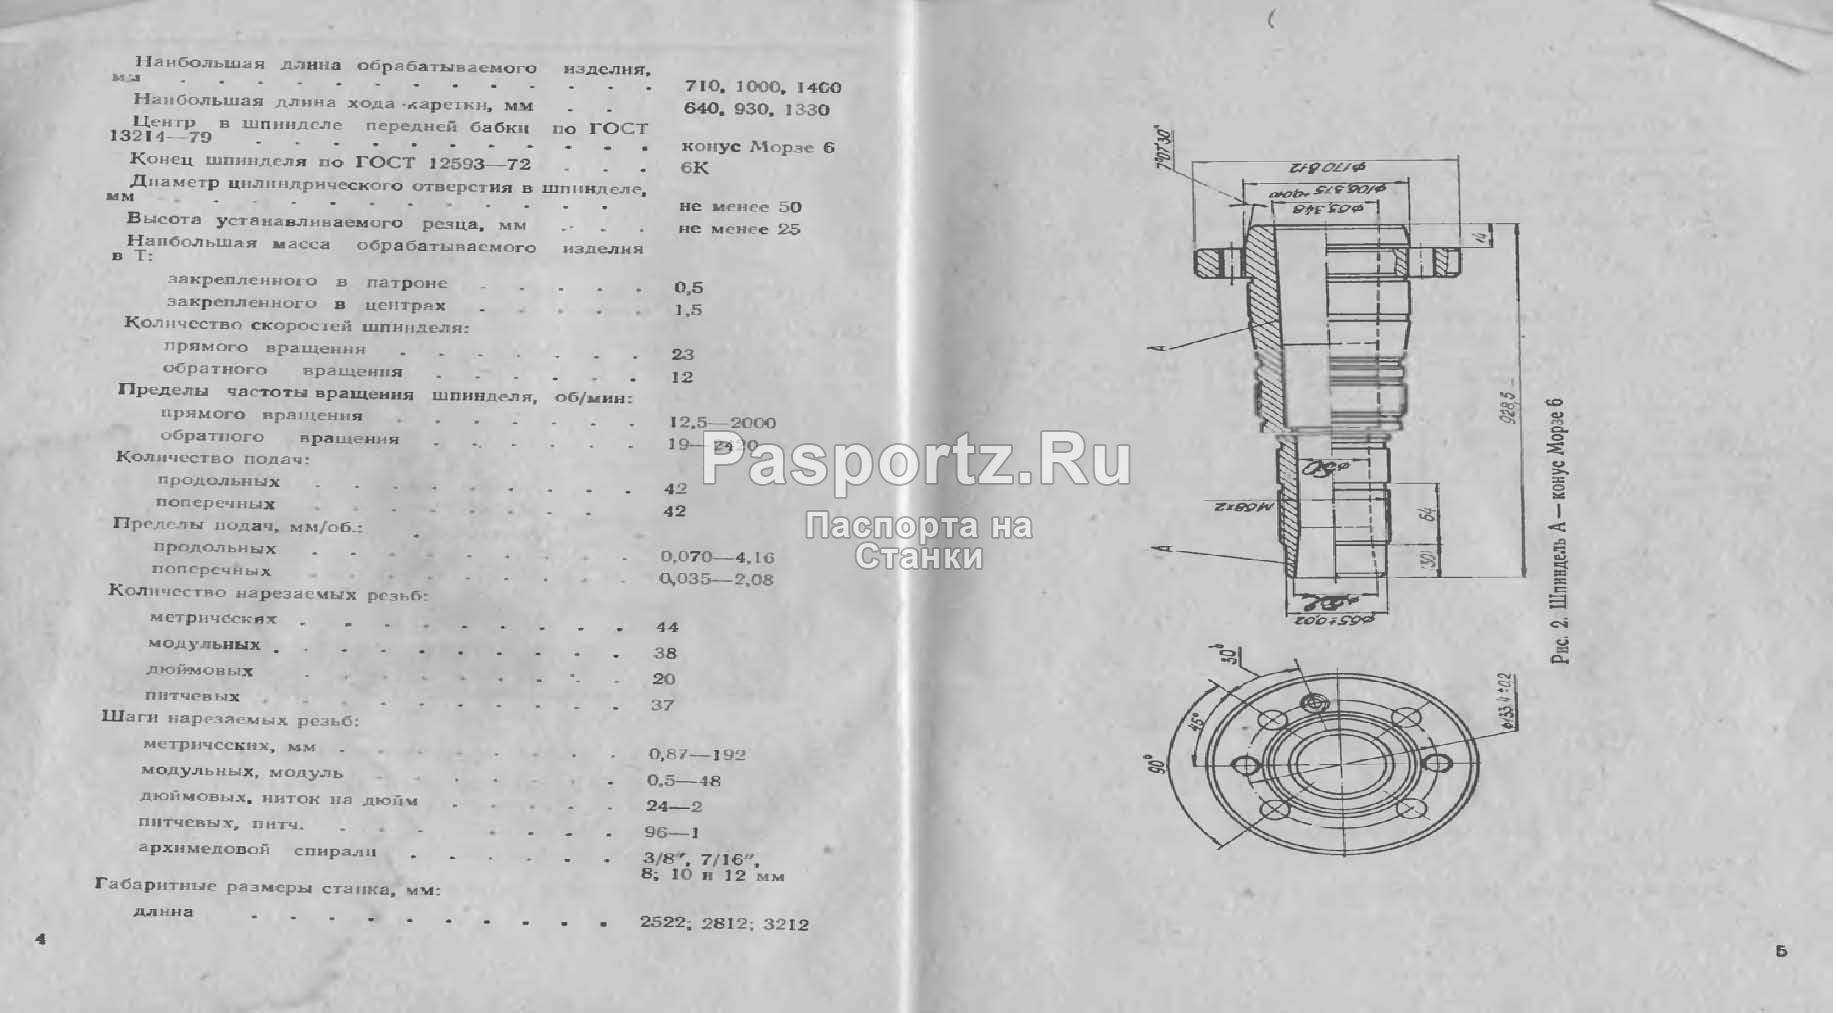 Ит-1м токарный станок: технические характеристики, паспорт, эксплуатация